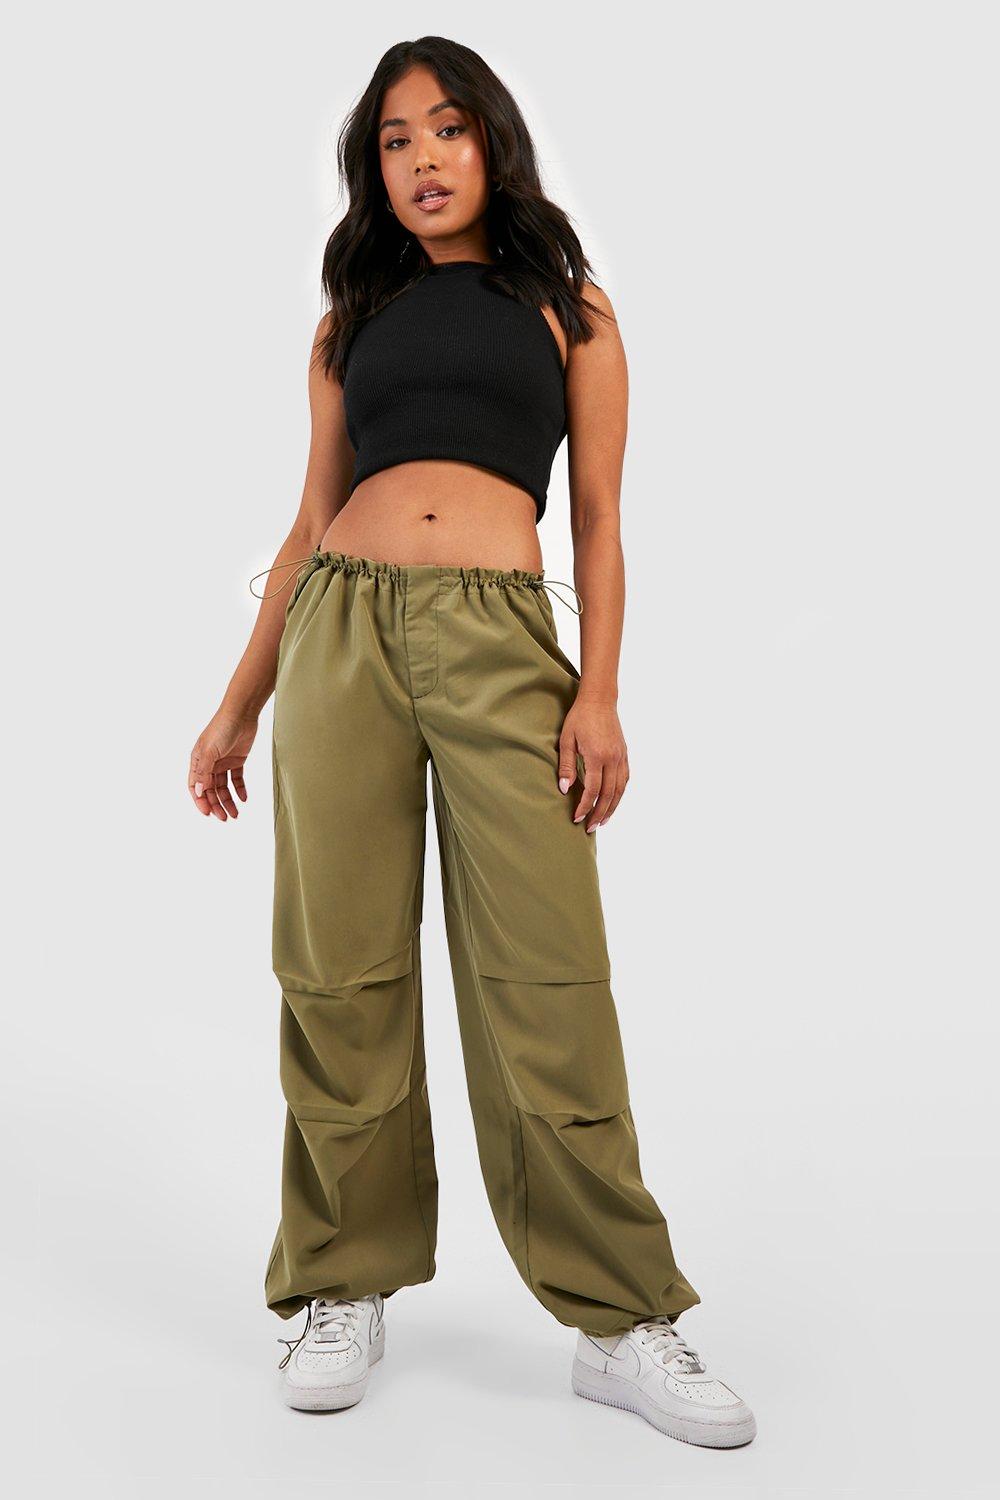 https://media.boohoo.com/i/boohoo/gzz46455_khaki_xl_2/female-khaki-petite-low-rise-elasticated-waist-parachute-trouser